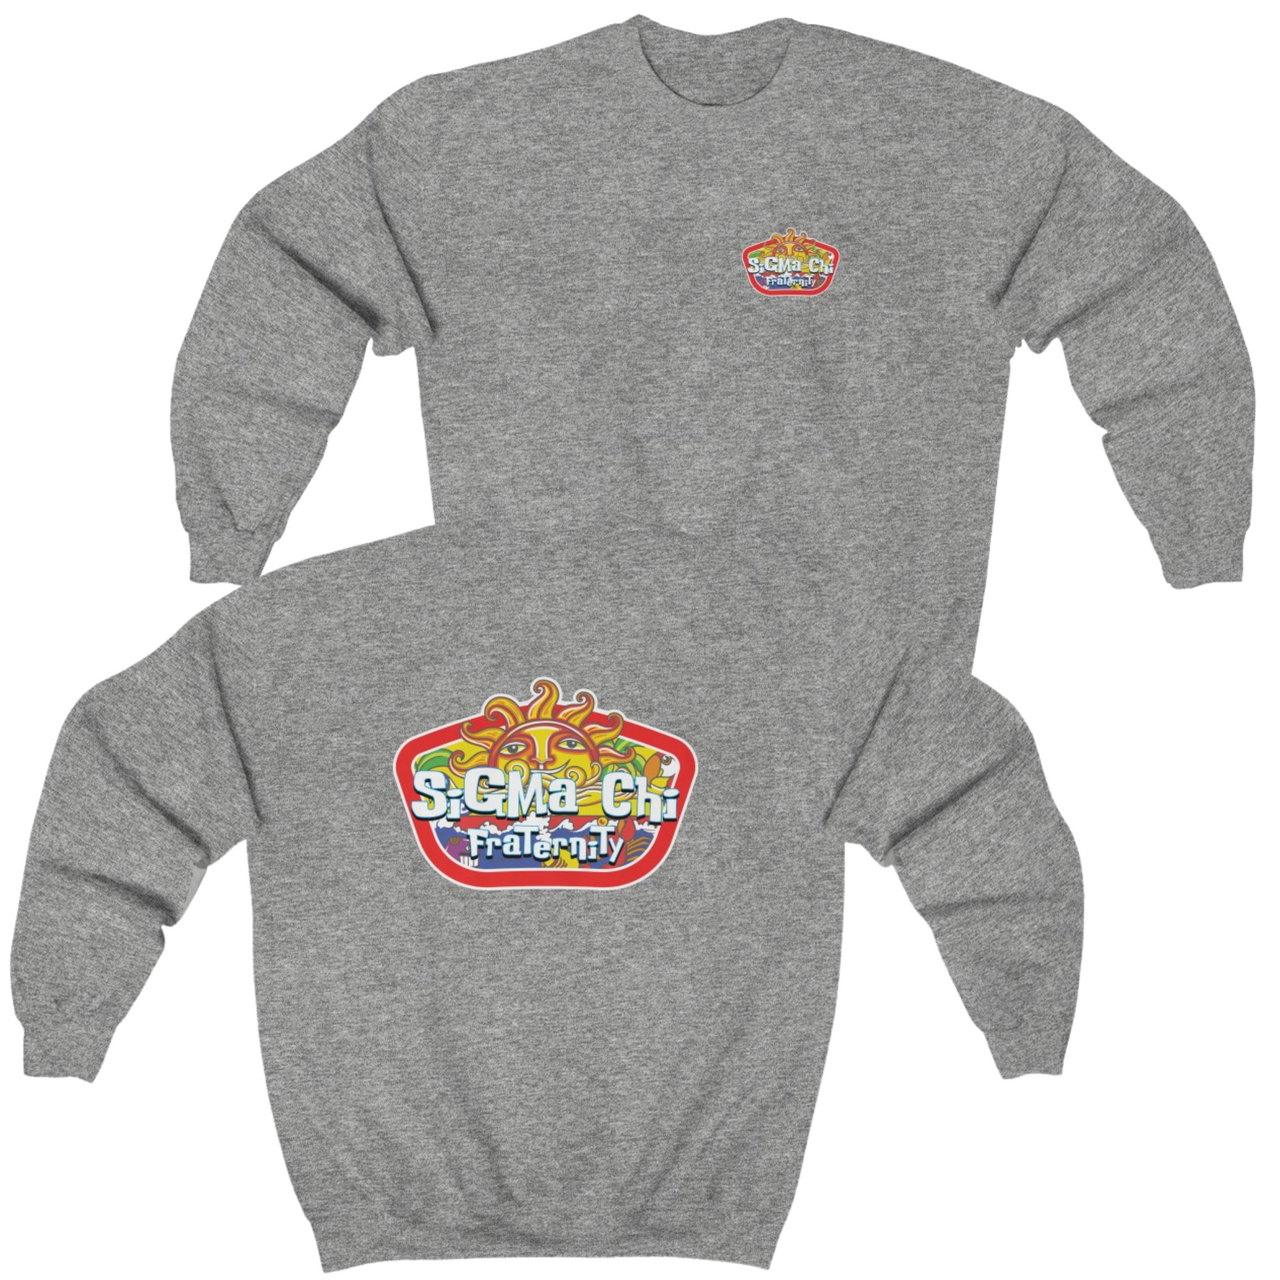 grey Sigma Chi Graphic Crewneck Sweatshirt | Summer Sol | Sigma Chi Fraternity Merch House